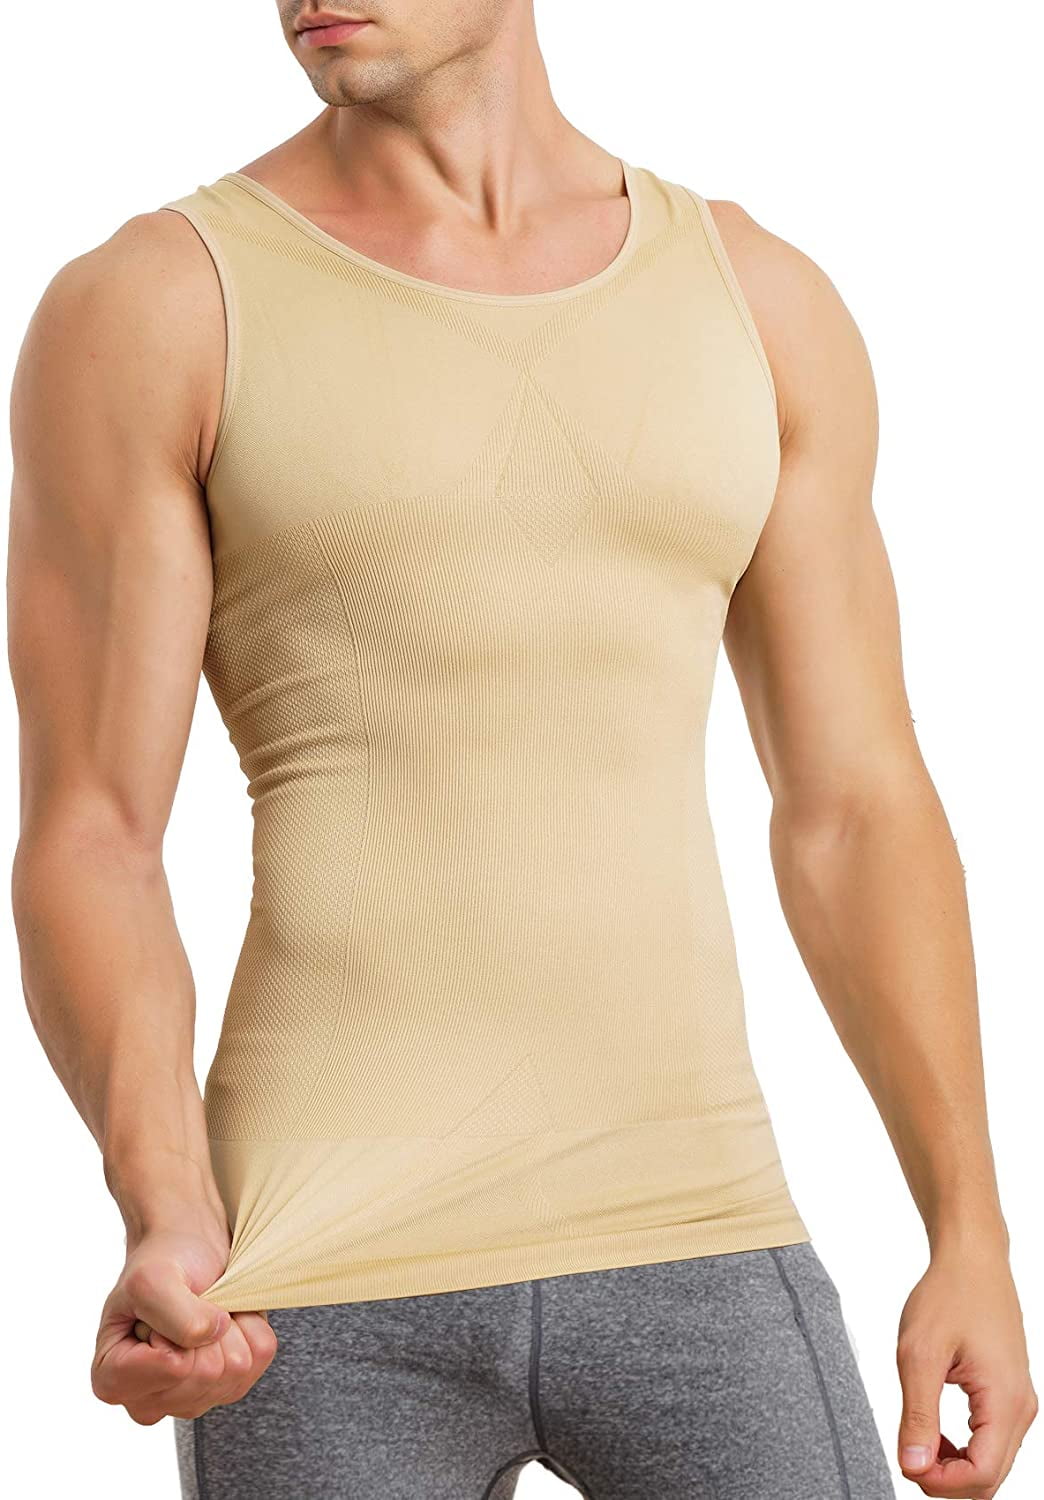 Gotoly Compression Shirt for Men Slimming Undershirt Body Shaper Tank Top  for Gynomastica Sleeveless Shapewear Vest Men(Beige Medium-Large) 